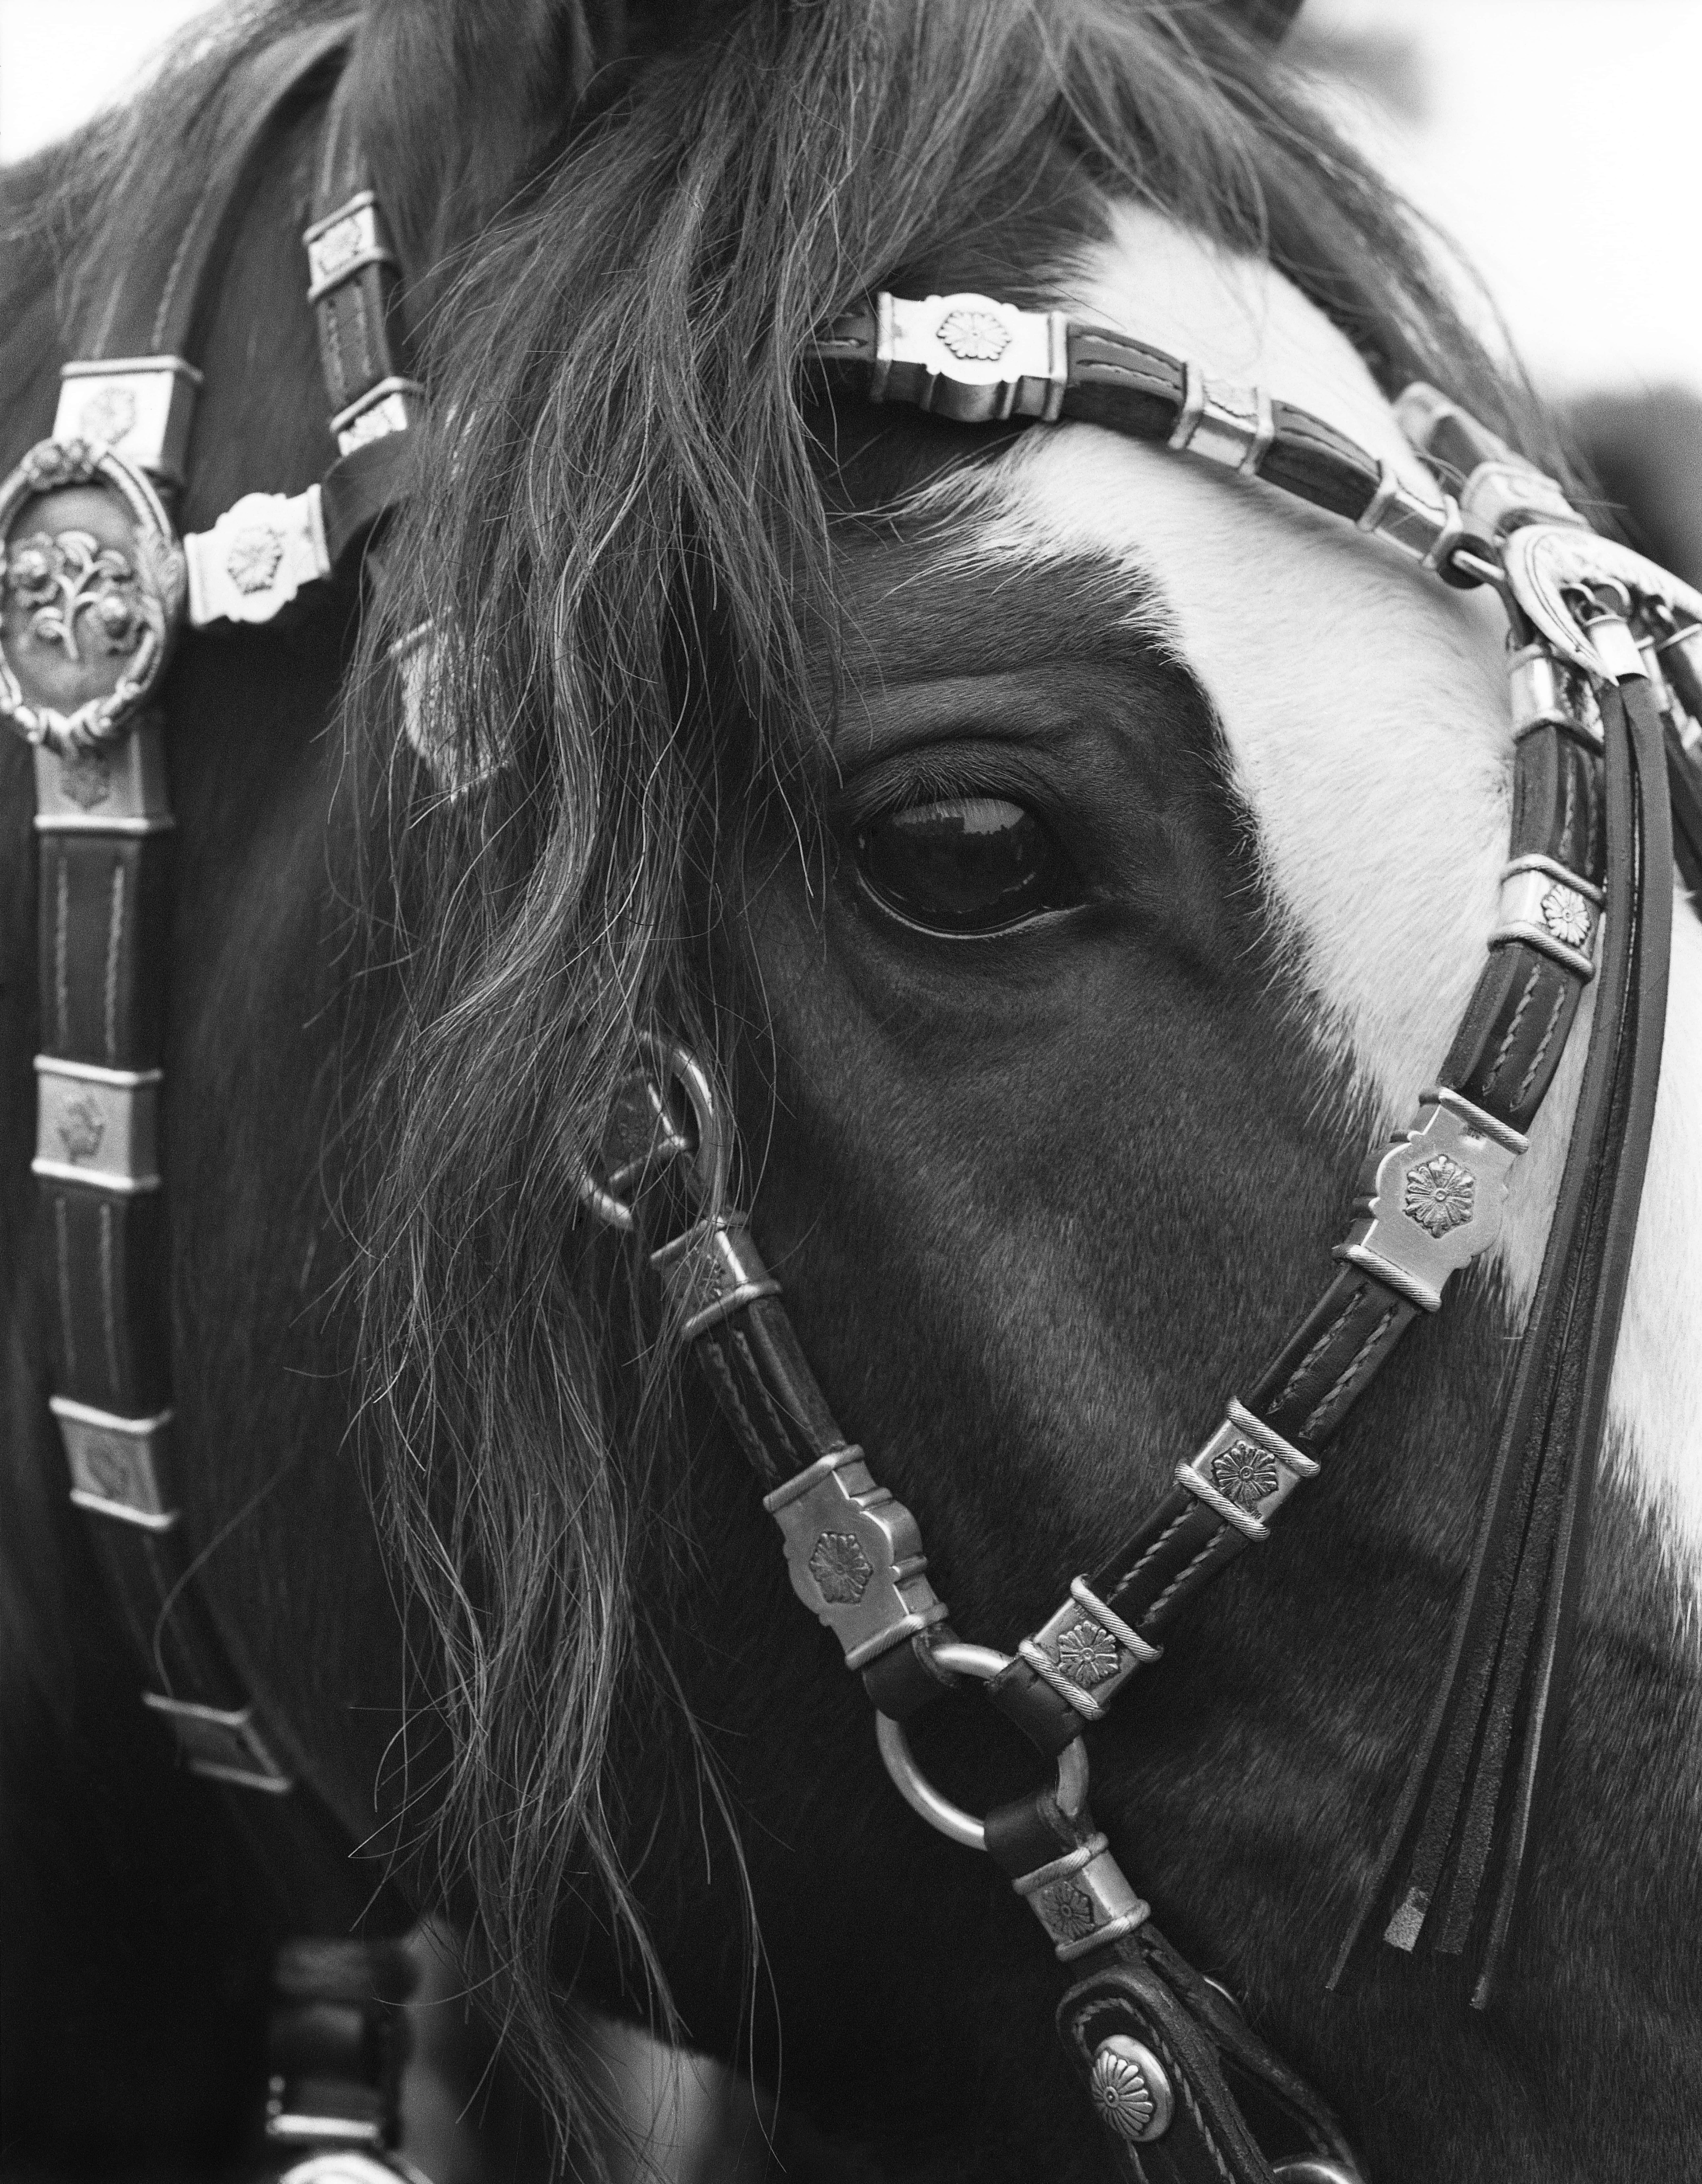 Aldo Sessa Black and White Photograph - Leather & Silver Head Harness (Province of Entre Rios Argentina)